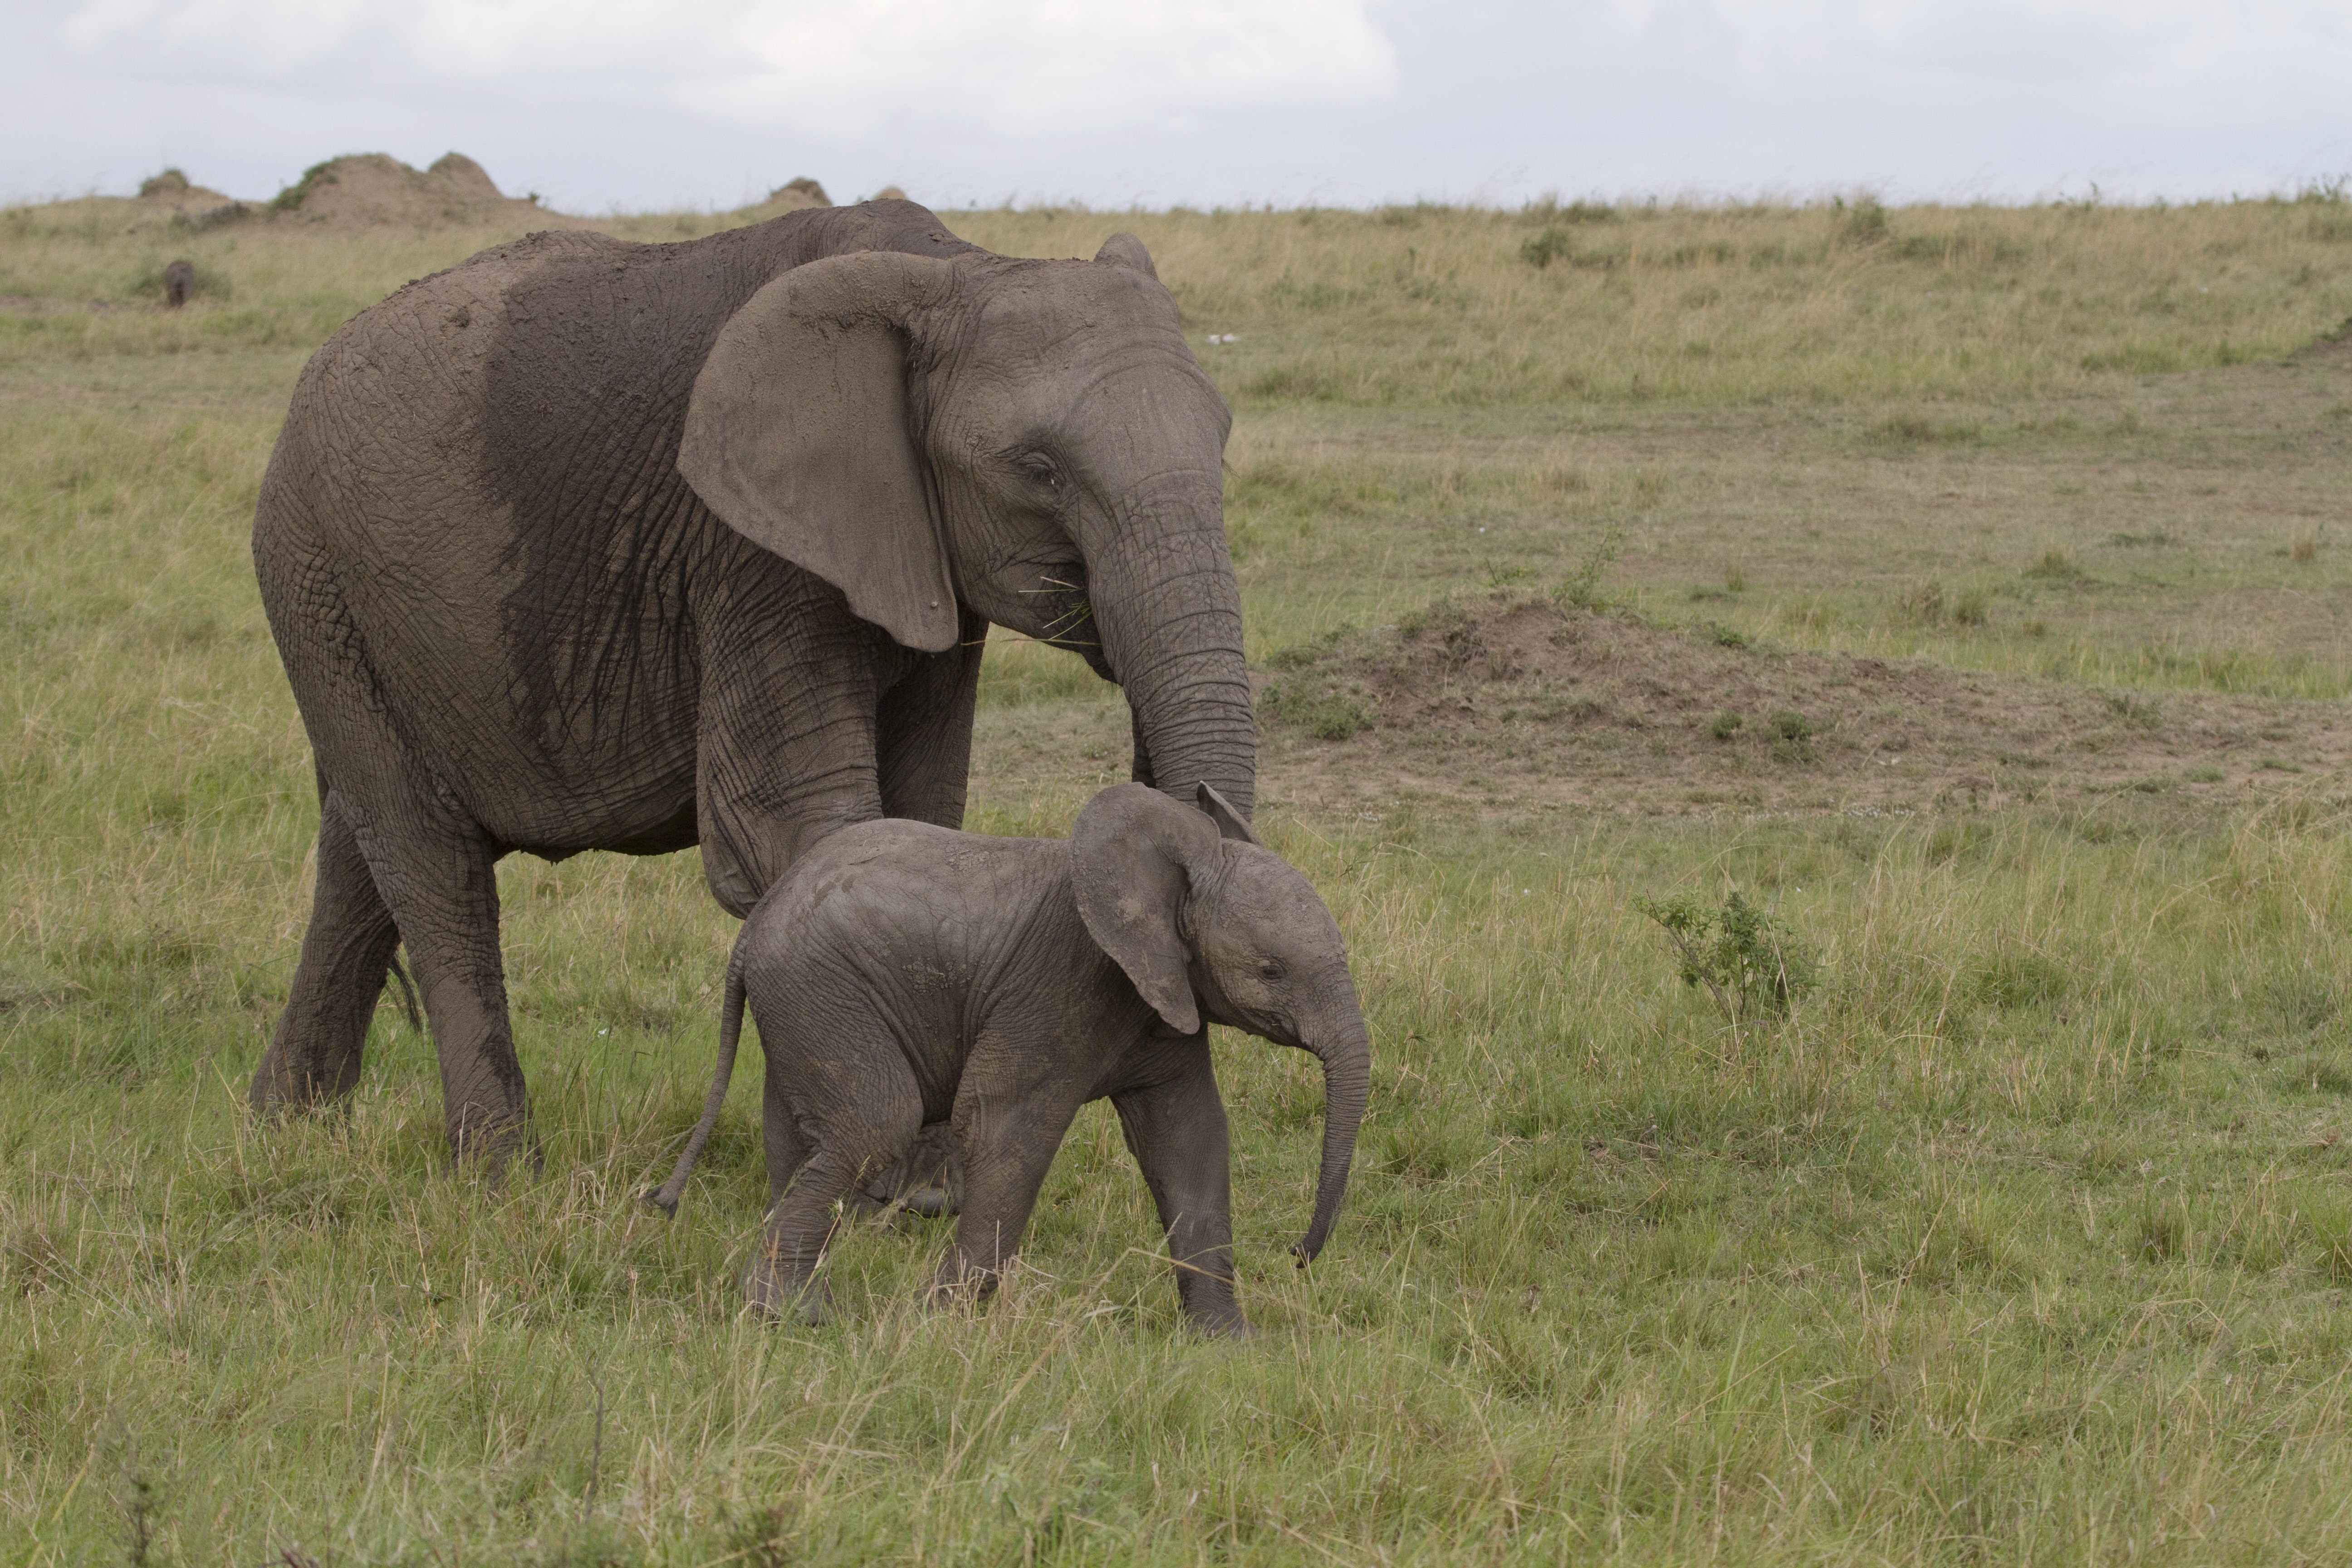 147183 Hintergrundbild herunterladen liebe, tiere, natur, elefant, elefanten, afrika, elefantenkalb, baby elefant - Bildschirmschoner und Bilder kostenlos